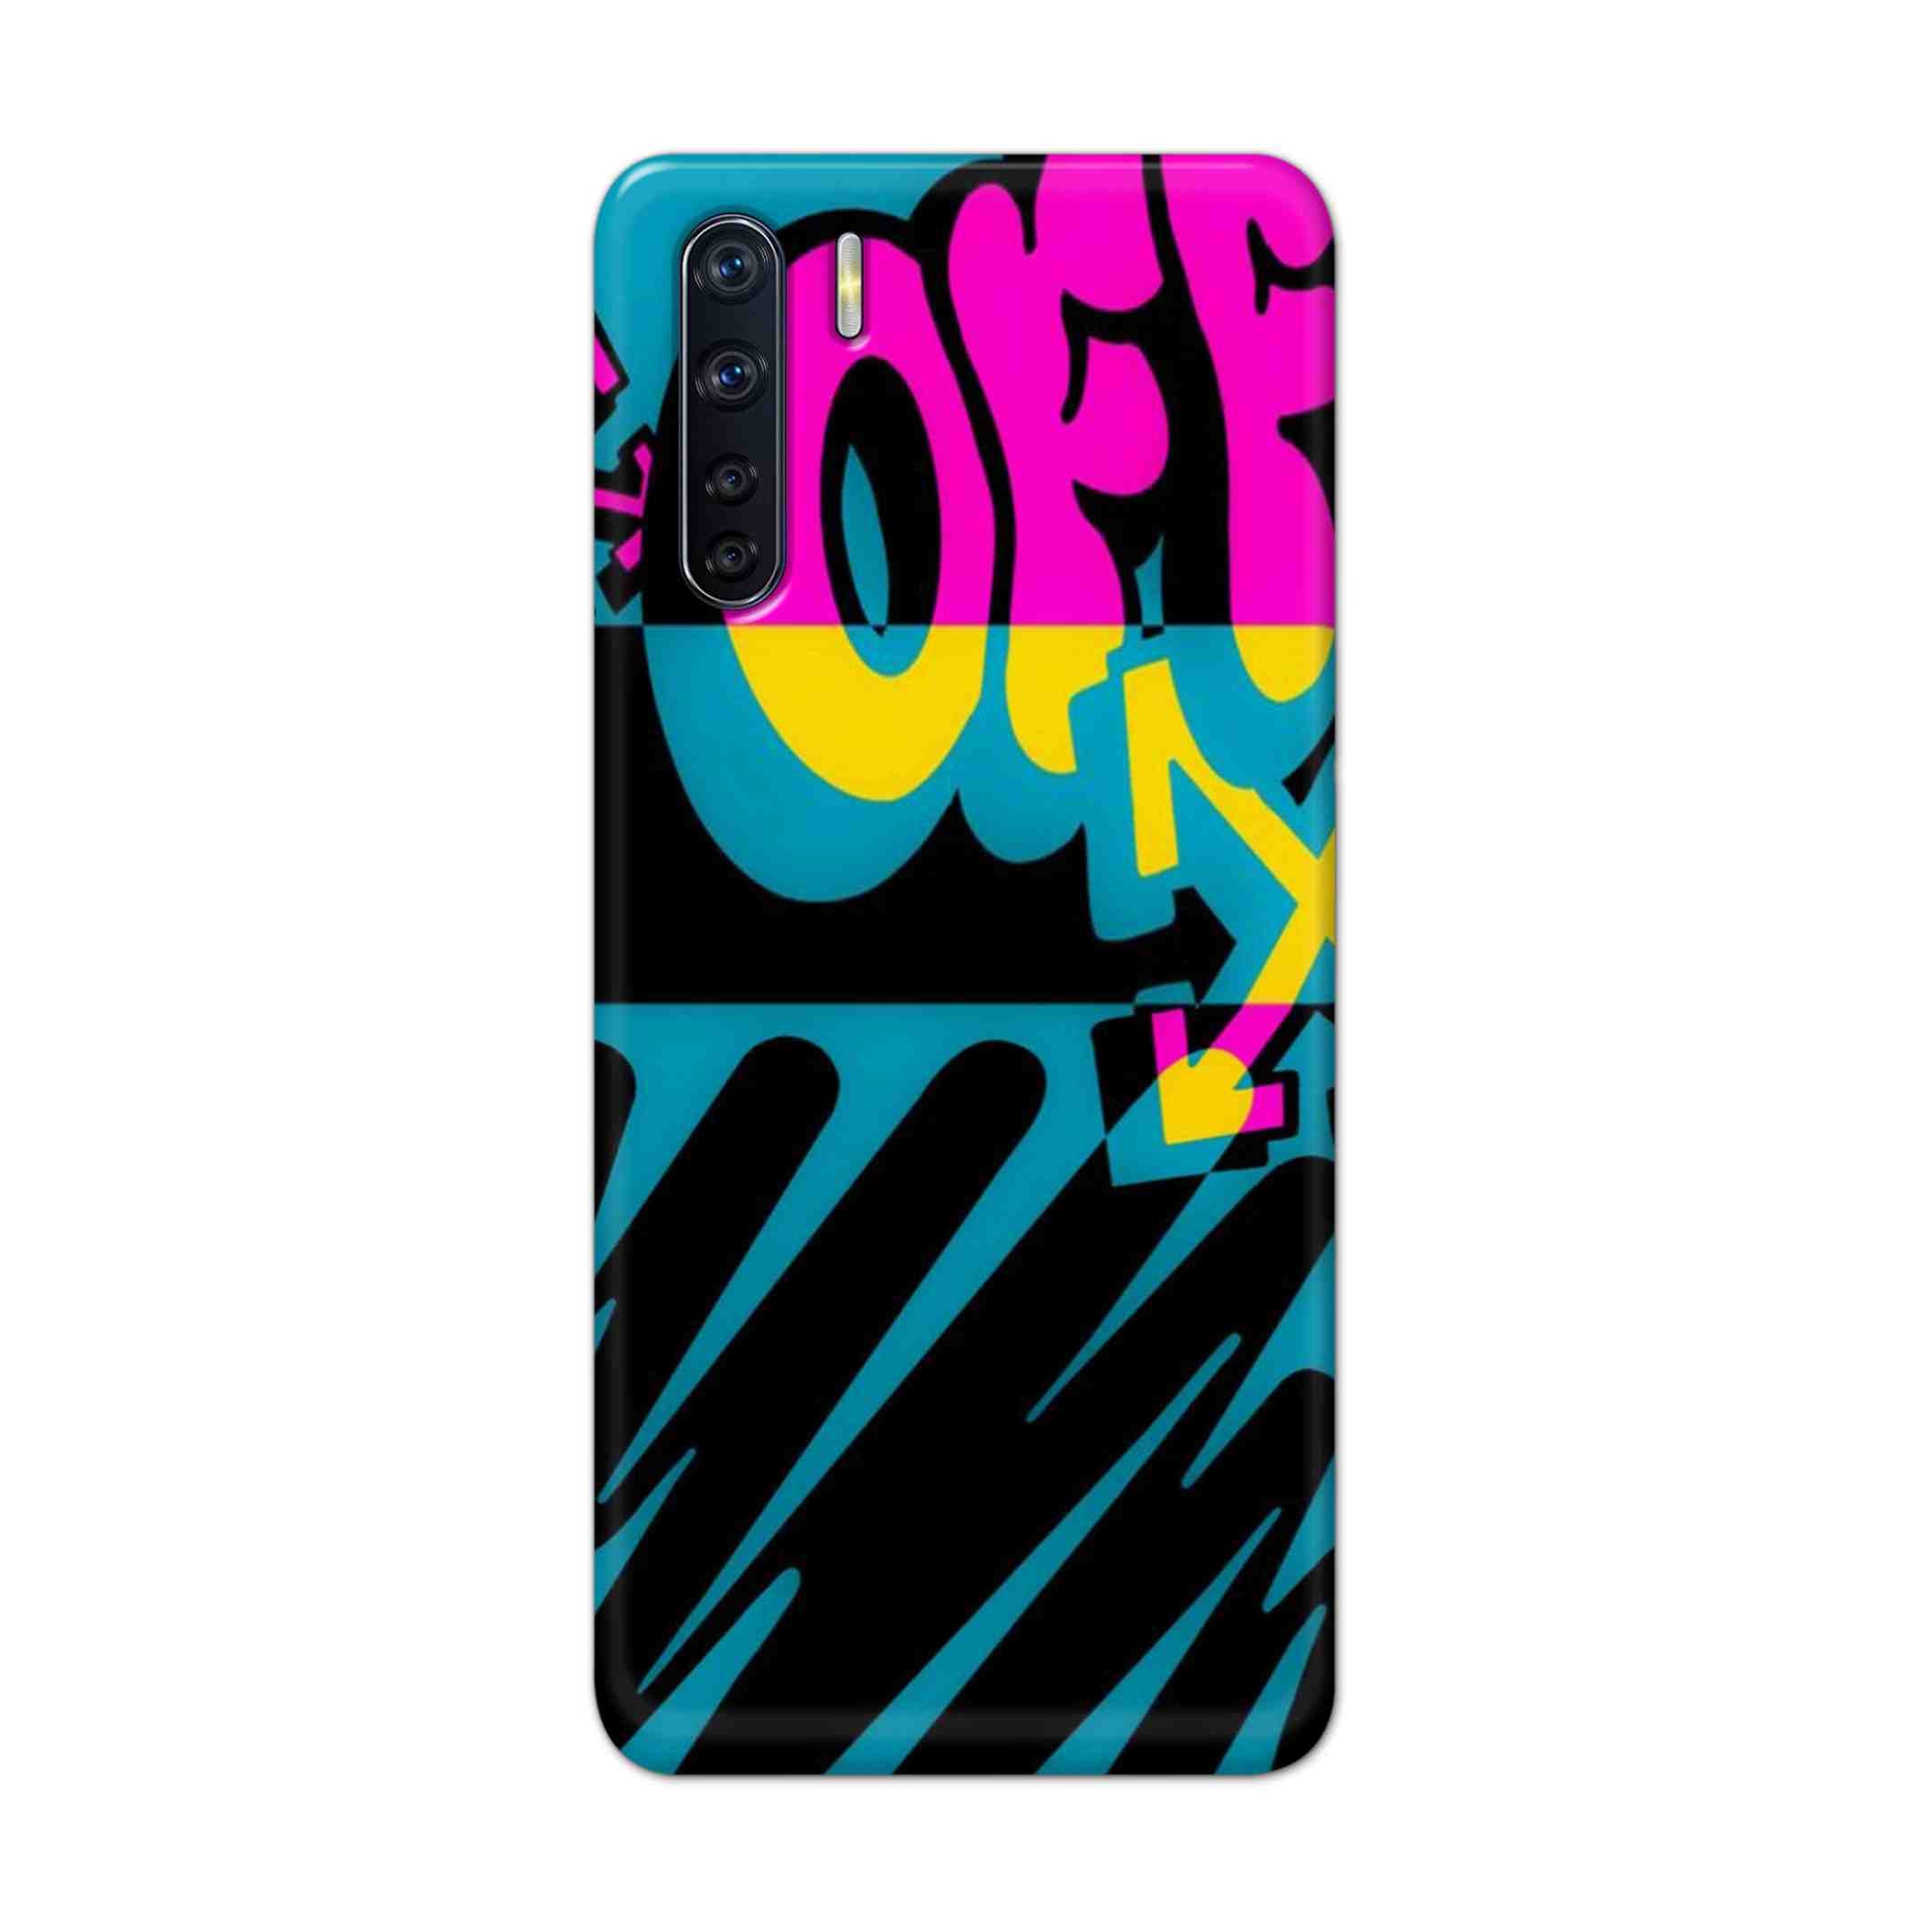 Buy Off Hard Back Mobile Phone Case Cover For OPPO F15 Online